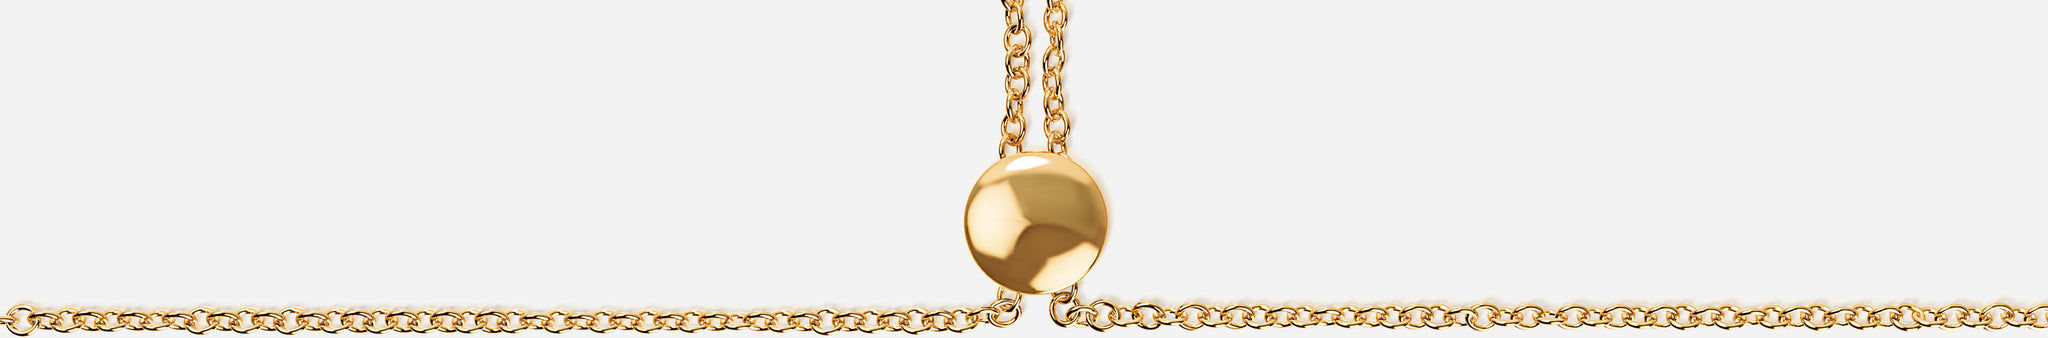 J'EVAR 14KT Yellow Gold Heart & Clover ALTR Lab Grown Diamond Bracelet Lock View